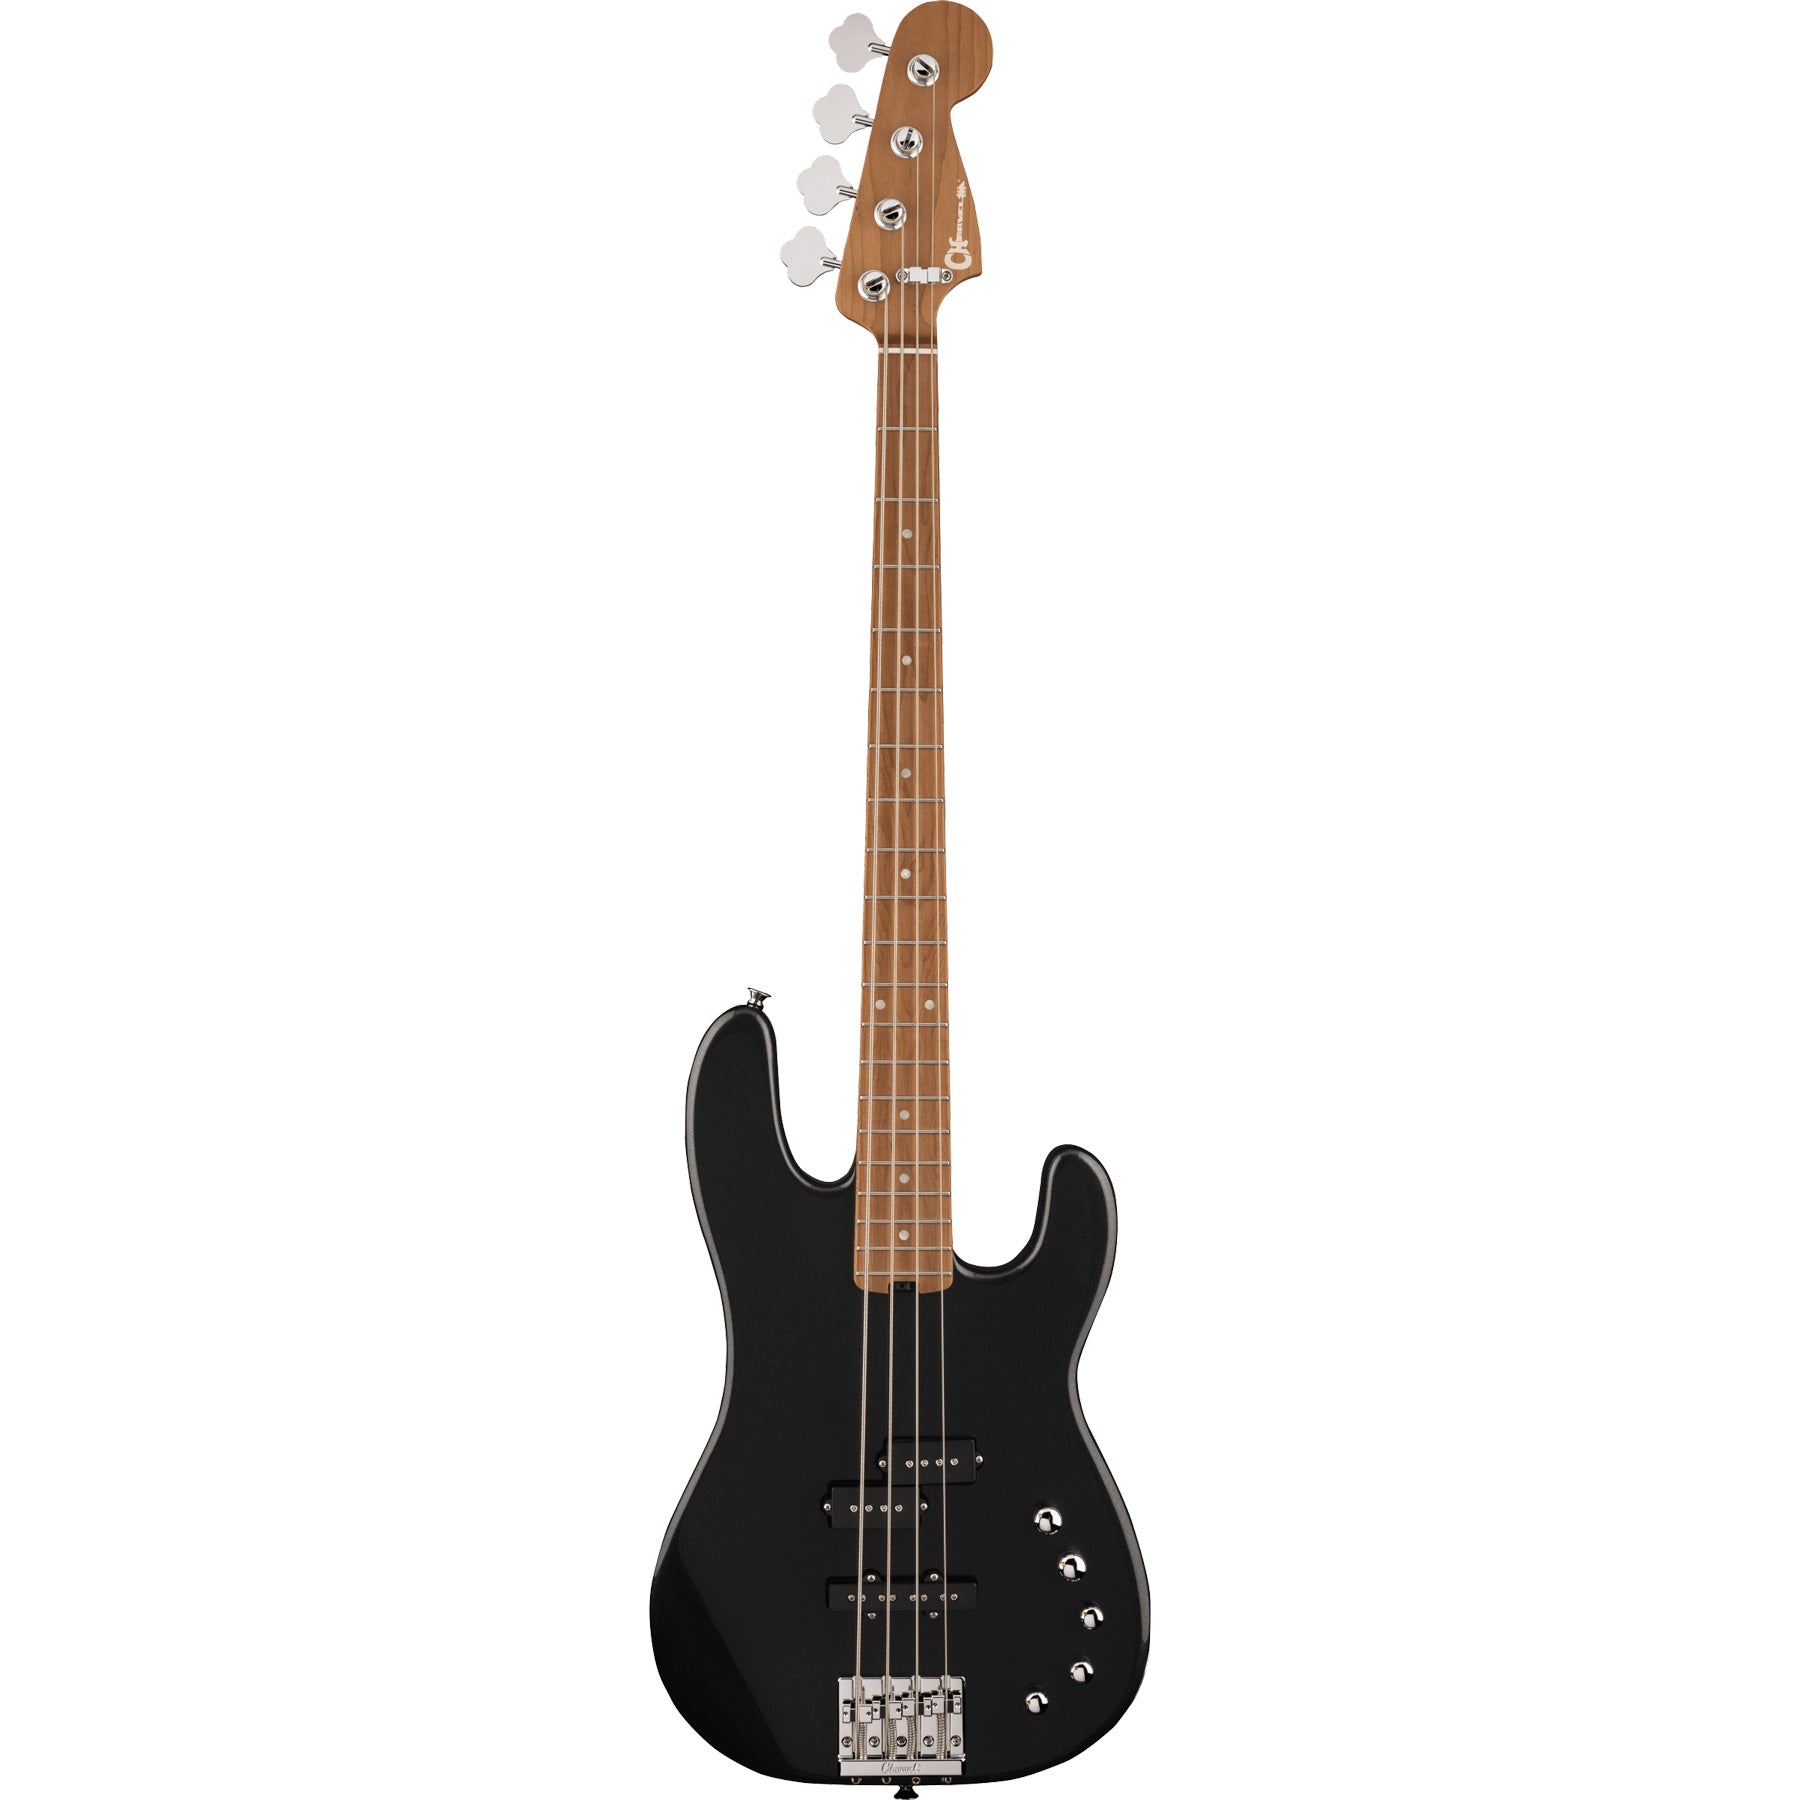 Charvel Pro-Mod San Dimas Bass PJ IV Caramelized Maple Fingerboard Metallic Black